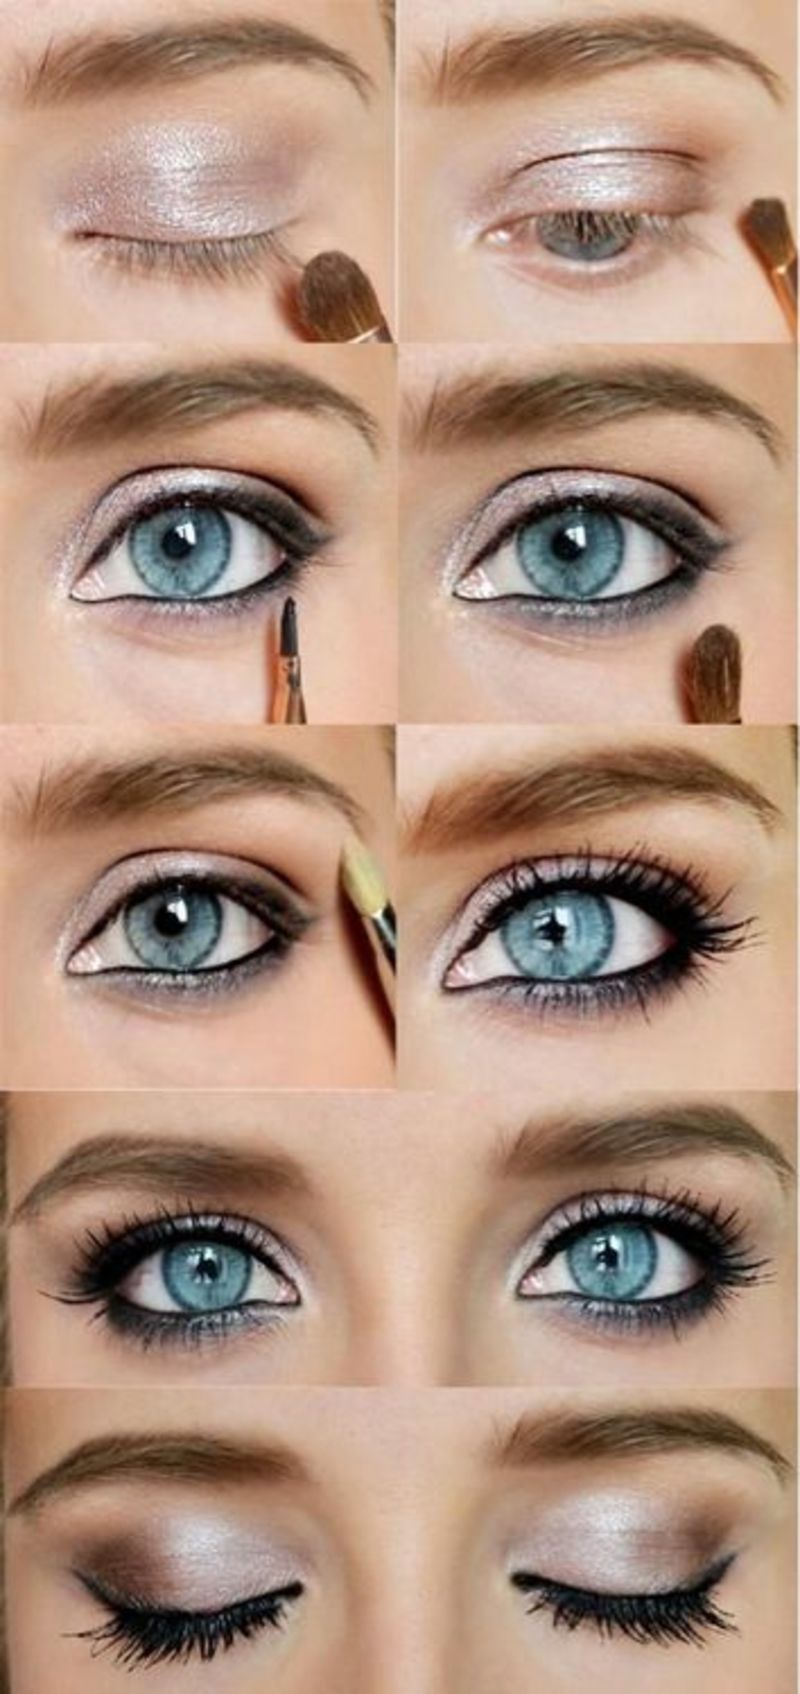 Cool Eye Makeup Cool Eyes Makeup Pinterest Eye Makeup And Makeup Ideas